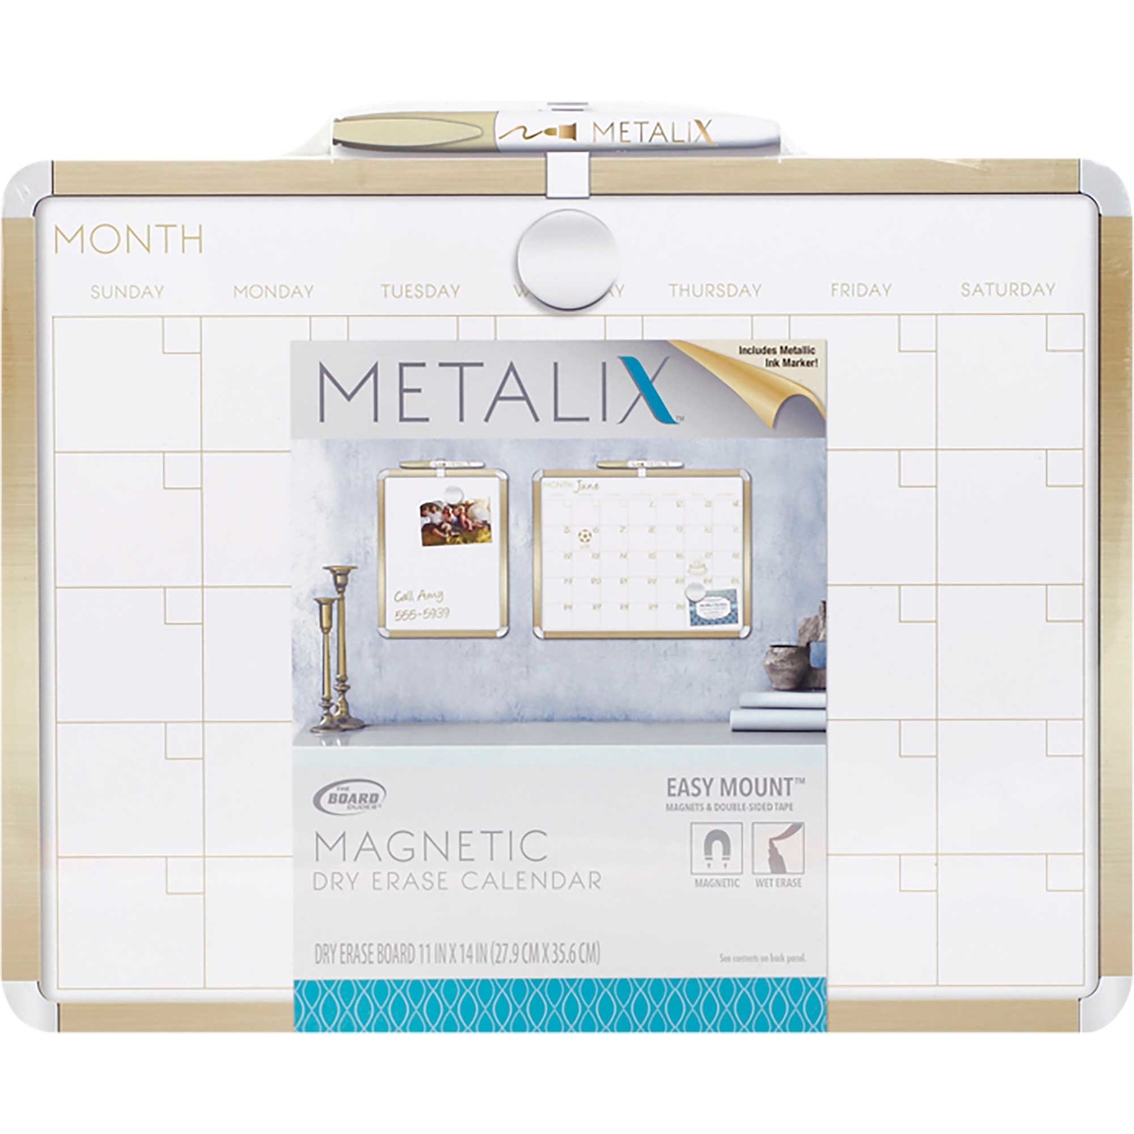 Dry Erase Magnetic Calendar ALA BOARD Stylish for Home Fridge Office School New 